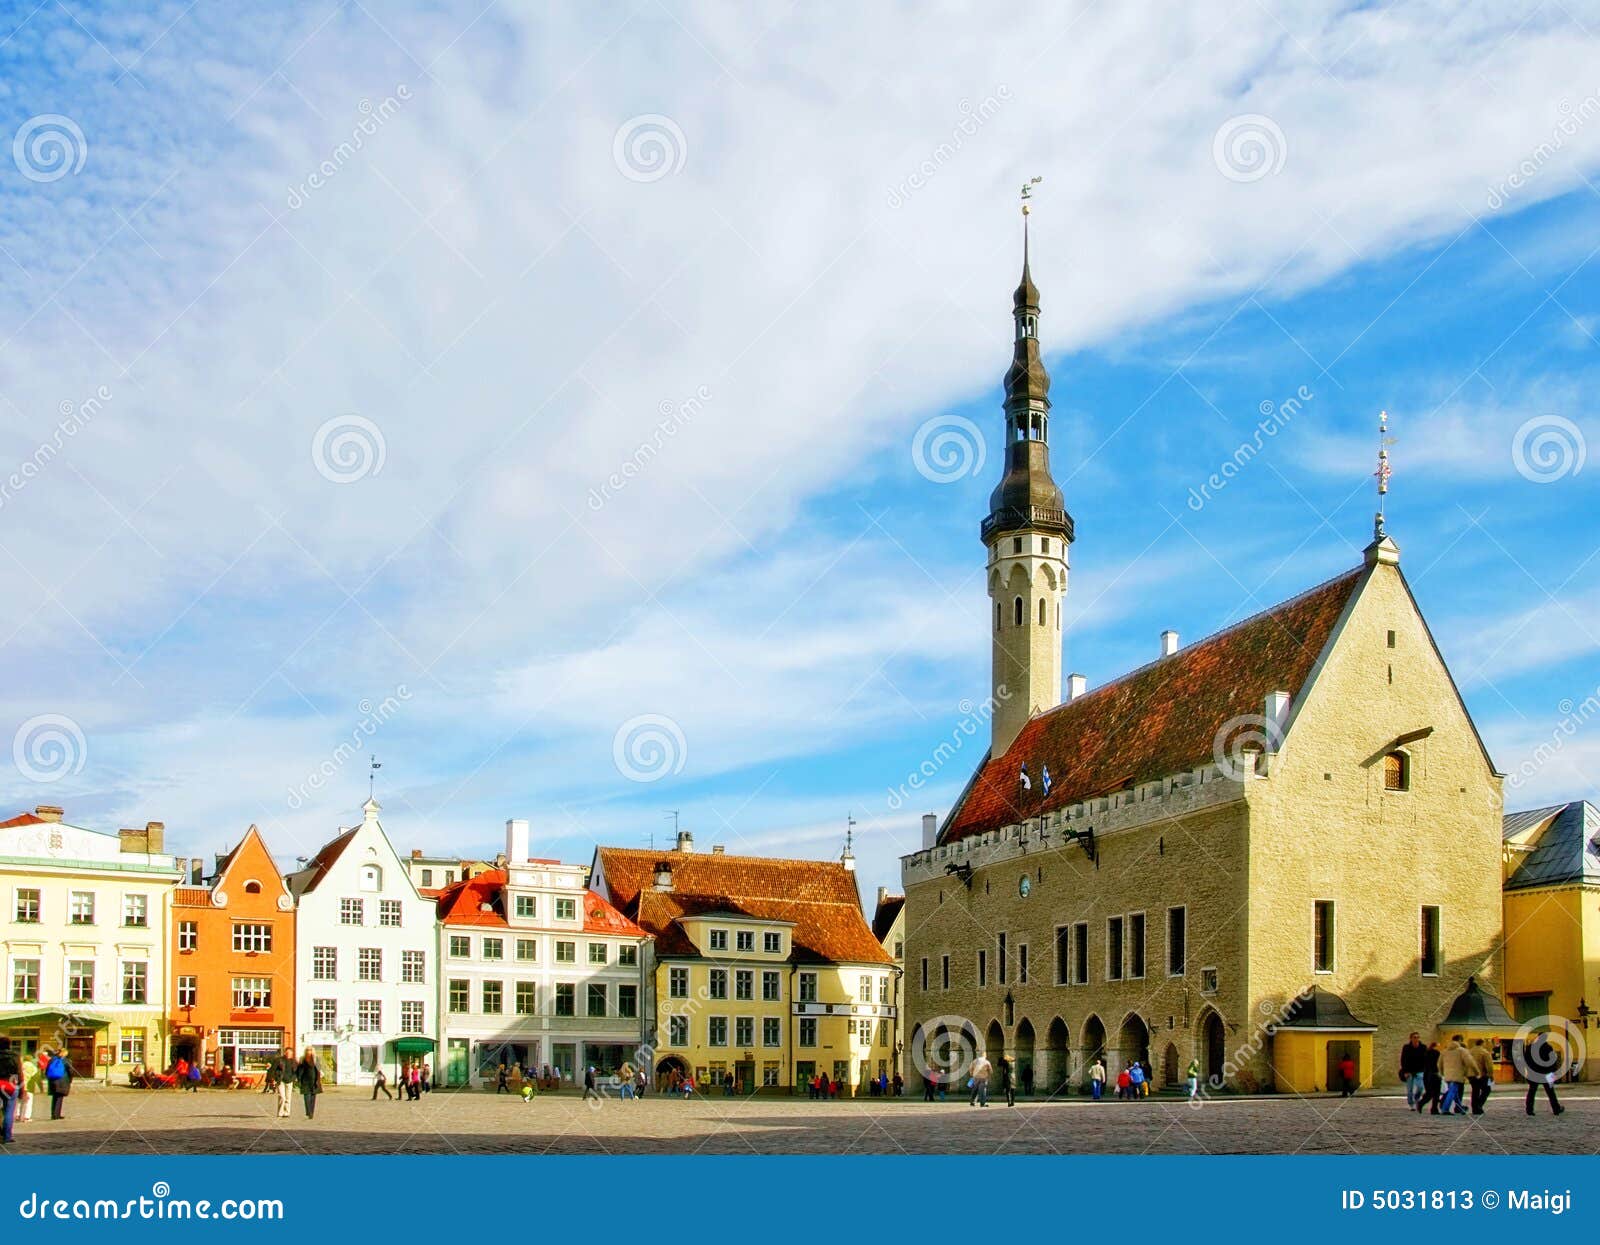 Tallinn medieval Town Hall